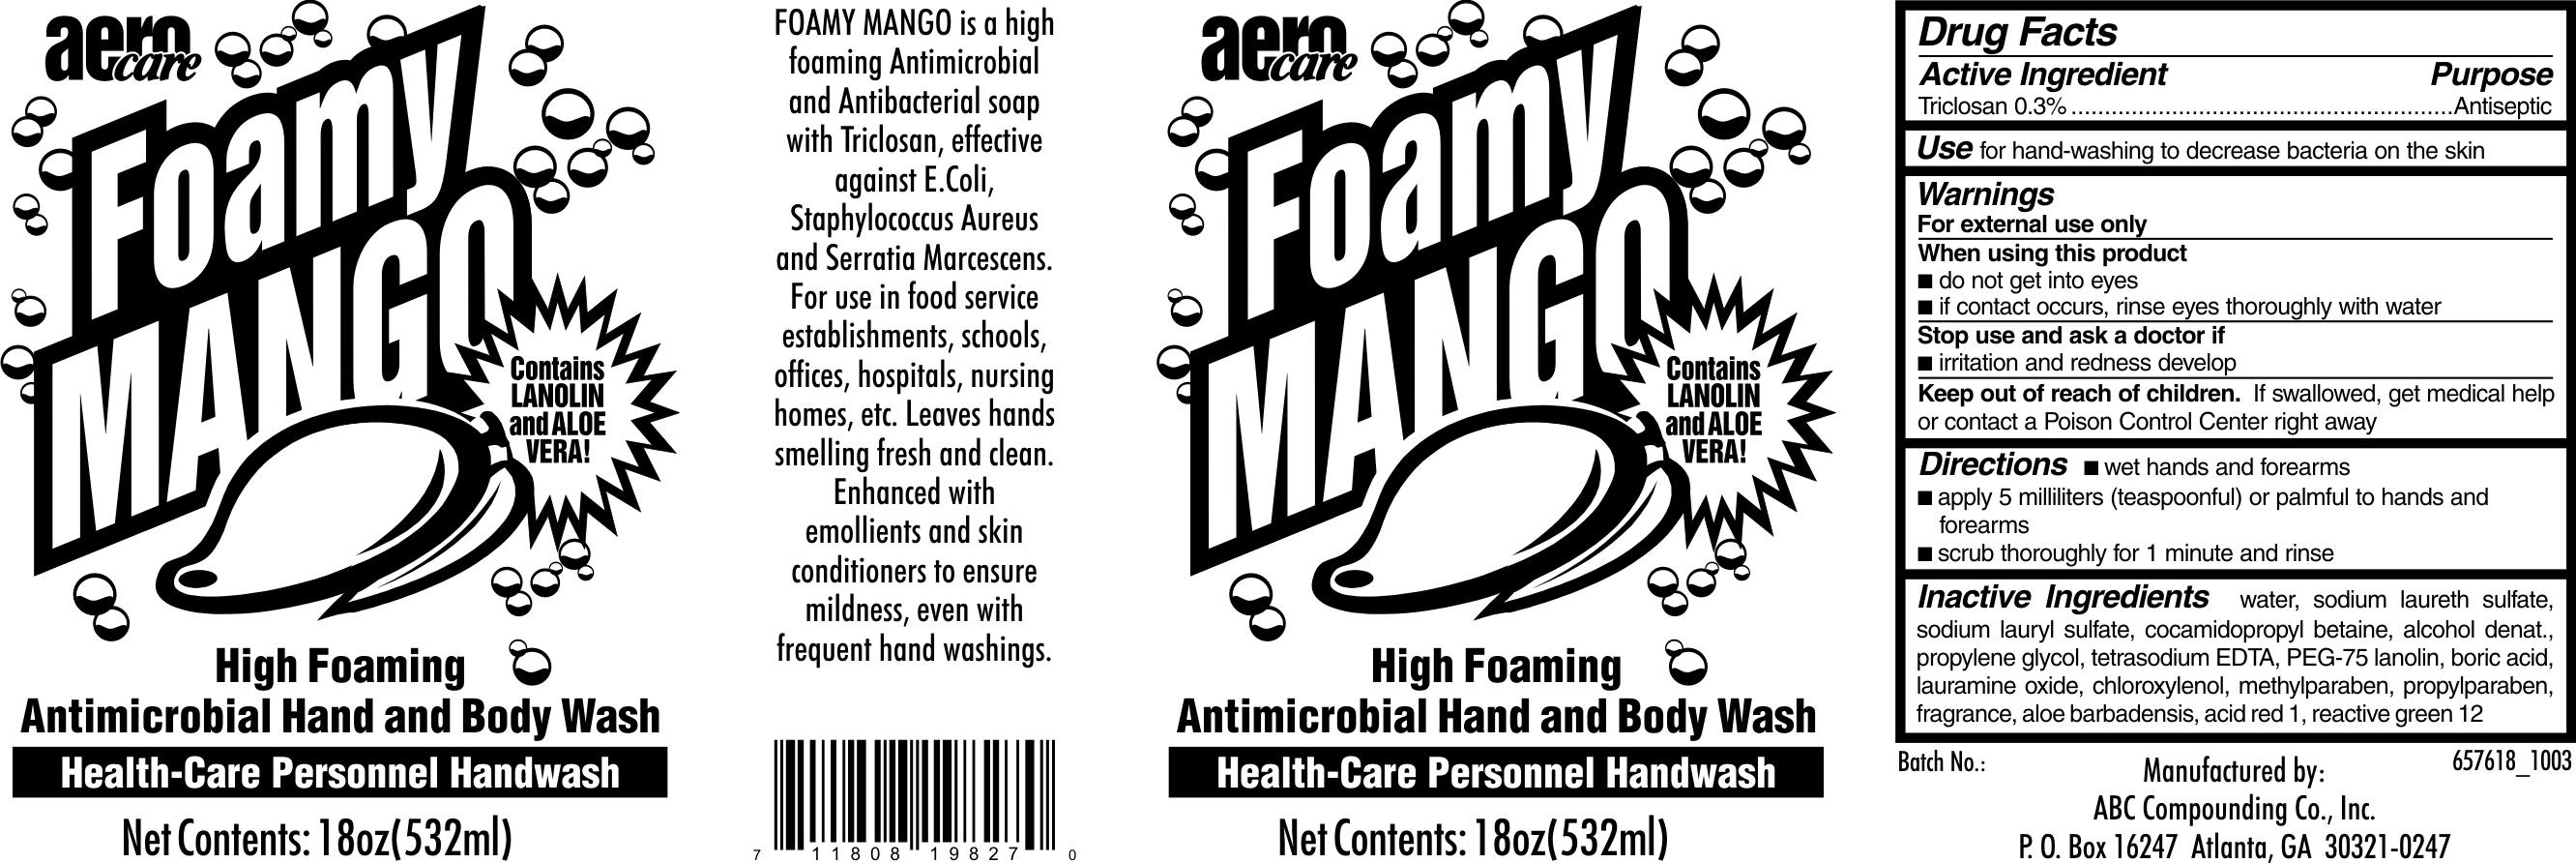 Foamy Mango (Triclosan) Soap [Abc Compounding Co., Inc.]